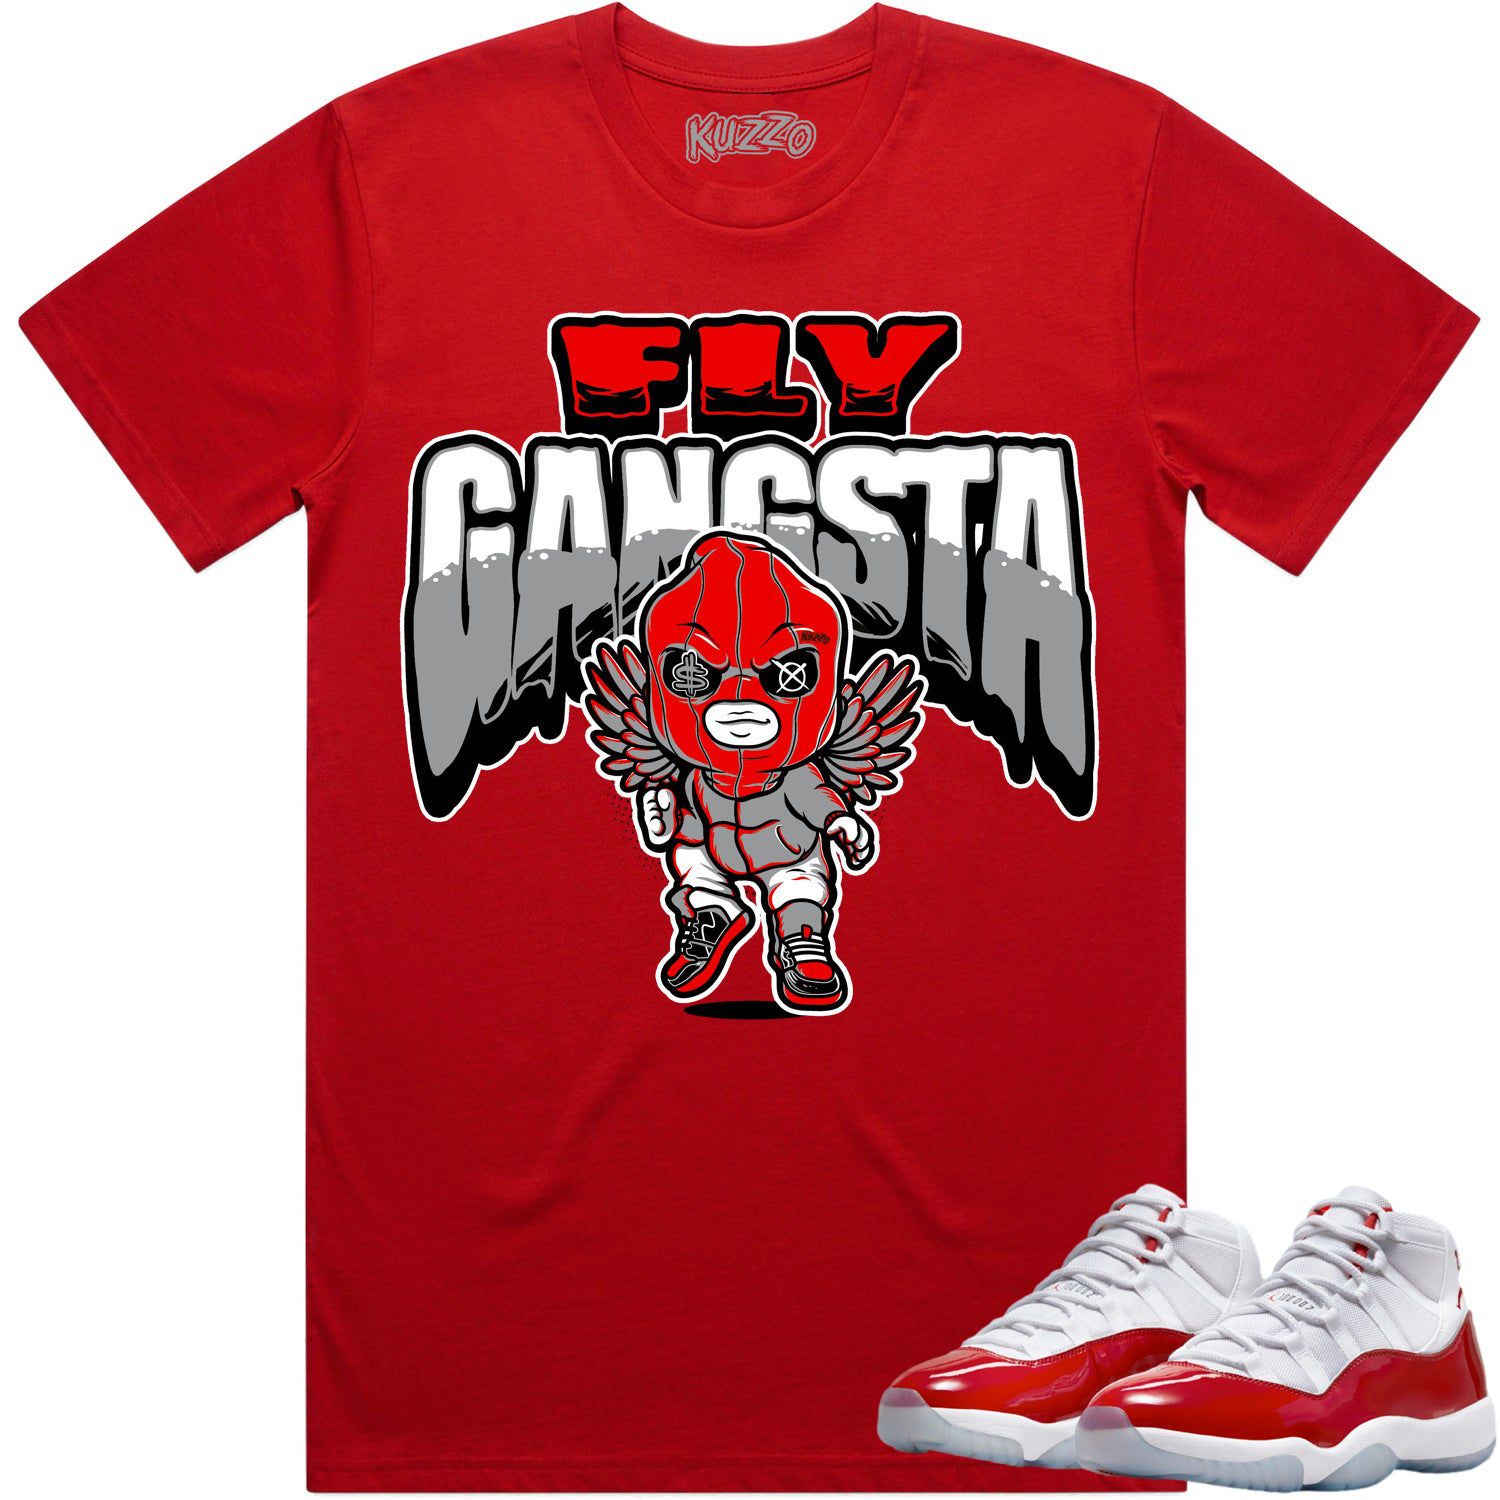 Cherry 11s Shirt - Jordan Retro 11 Cherry Shirts - Red Fly Gangsta